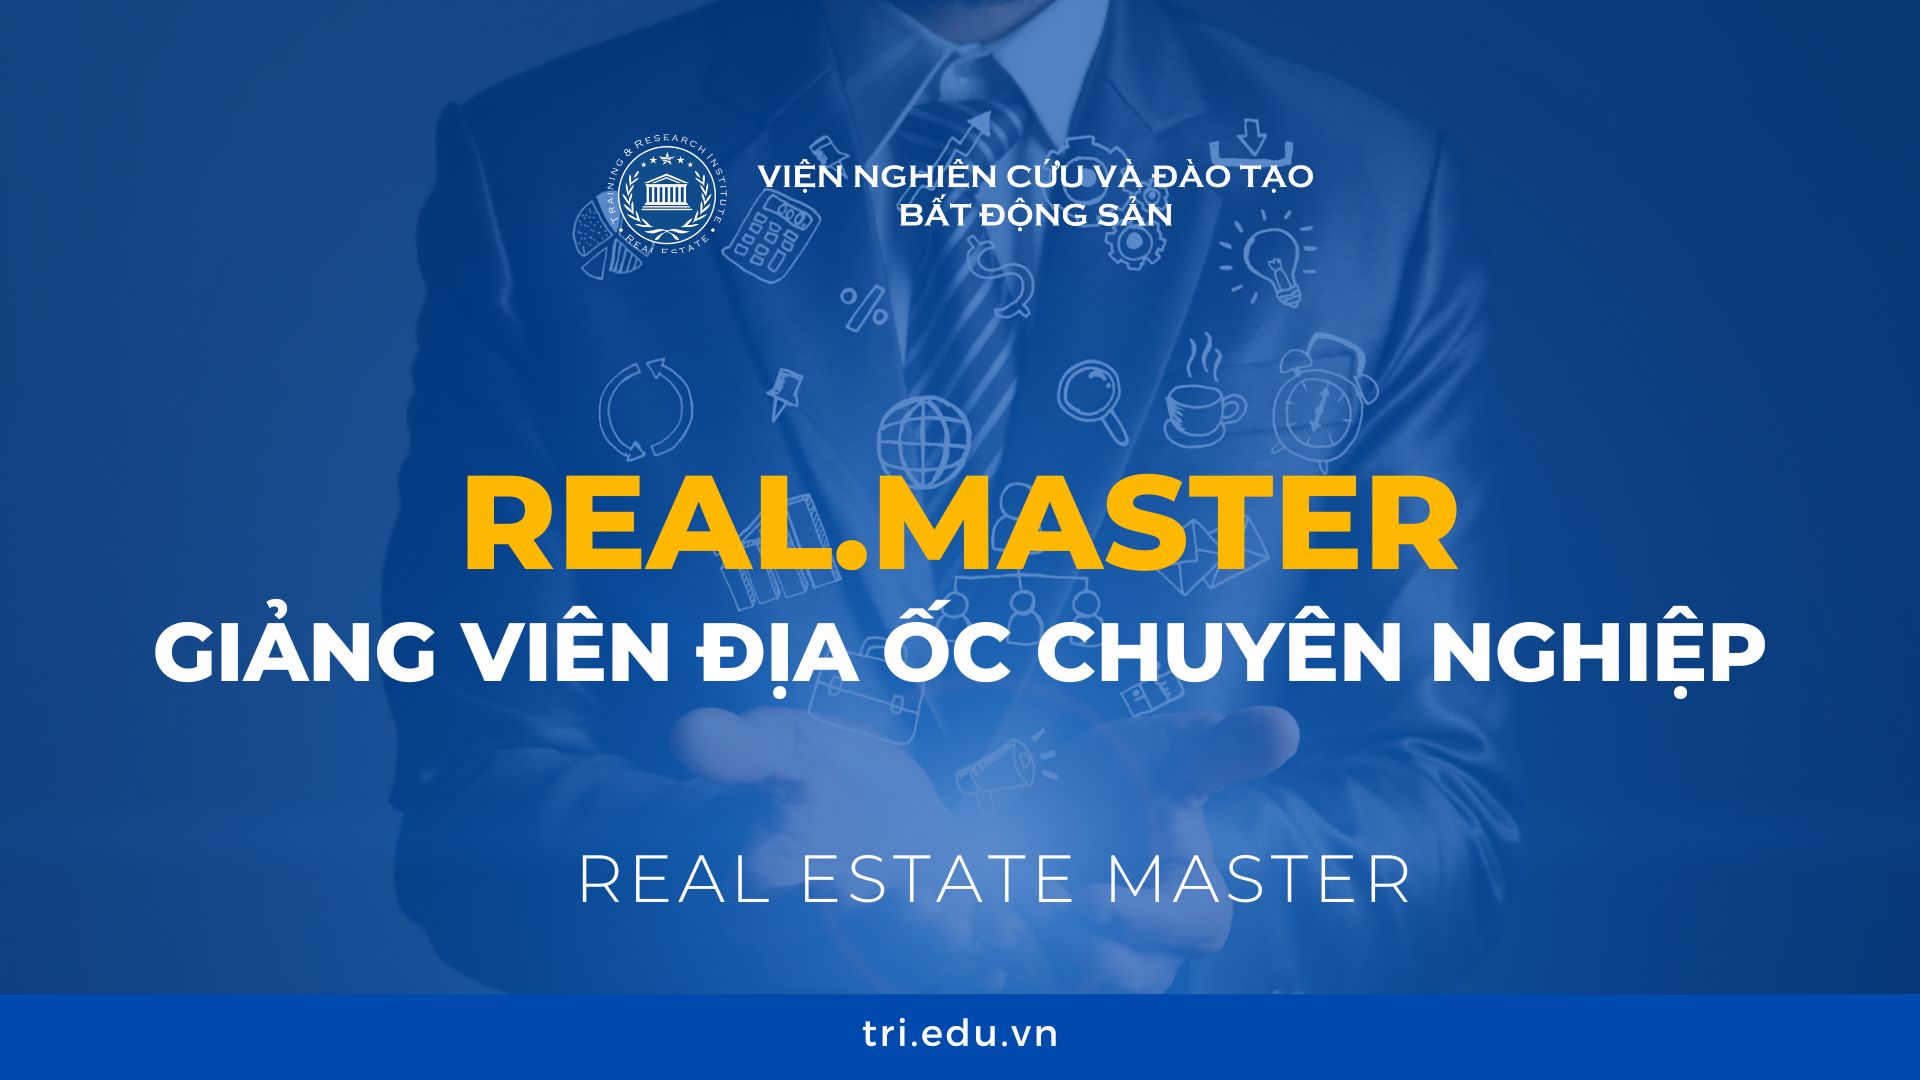 Real.master Khoa Hoc Giang Vien Dia Oc